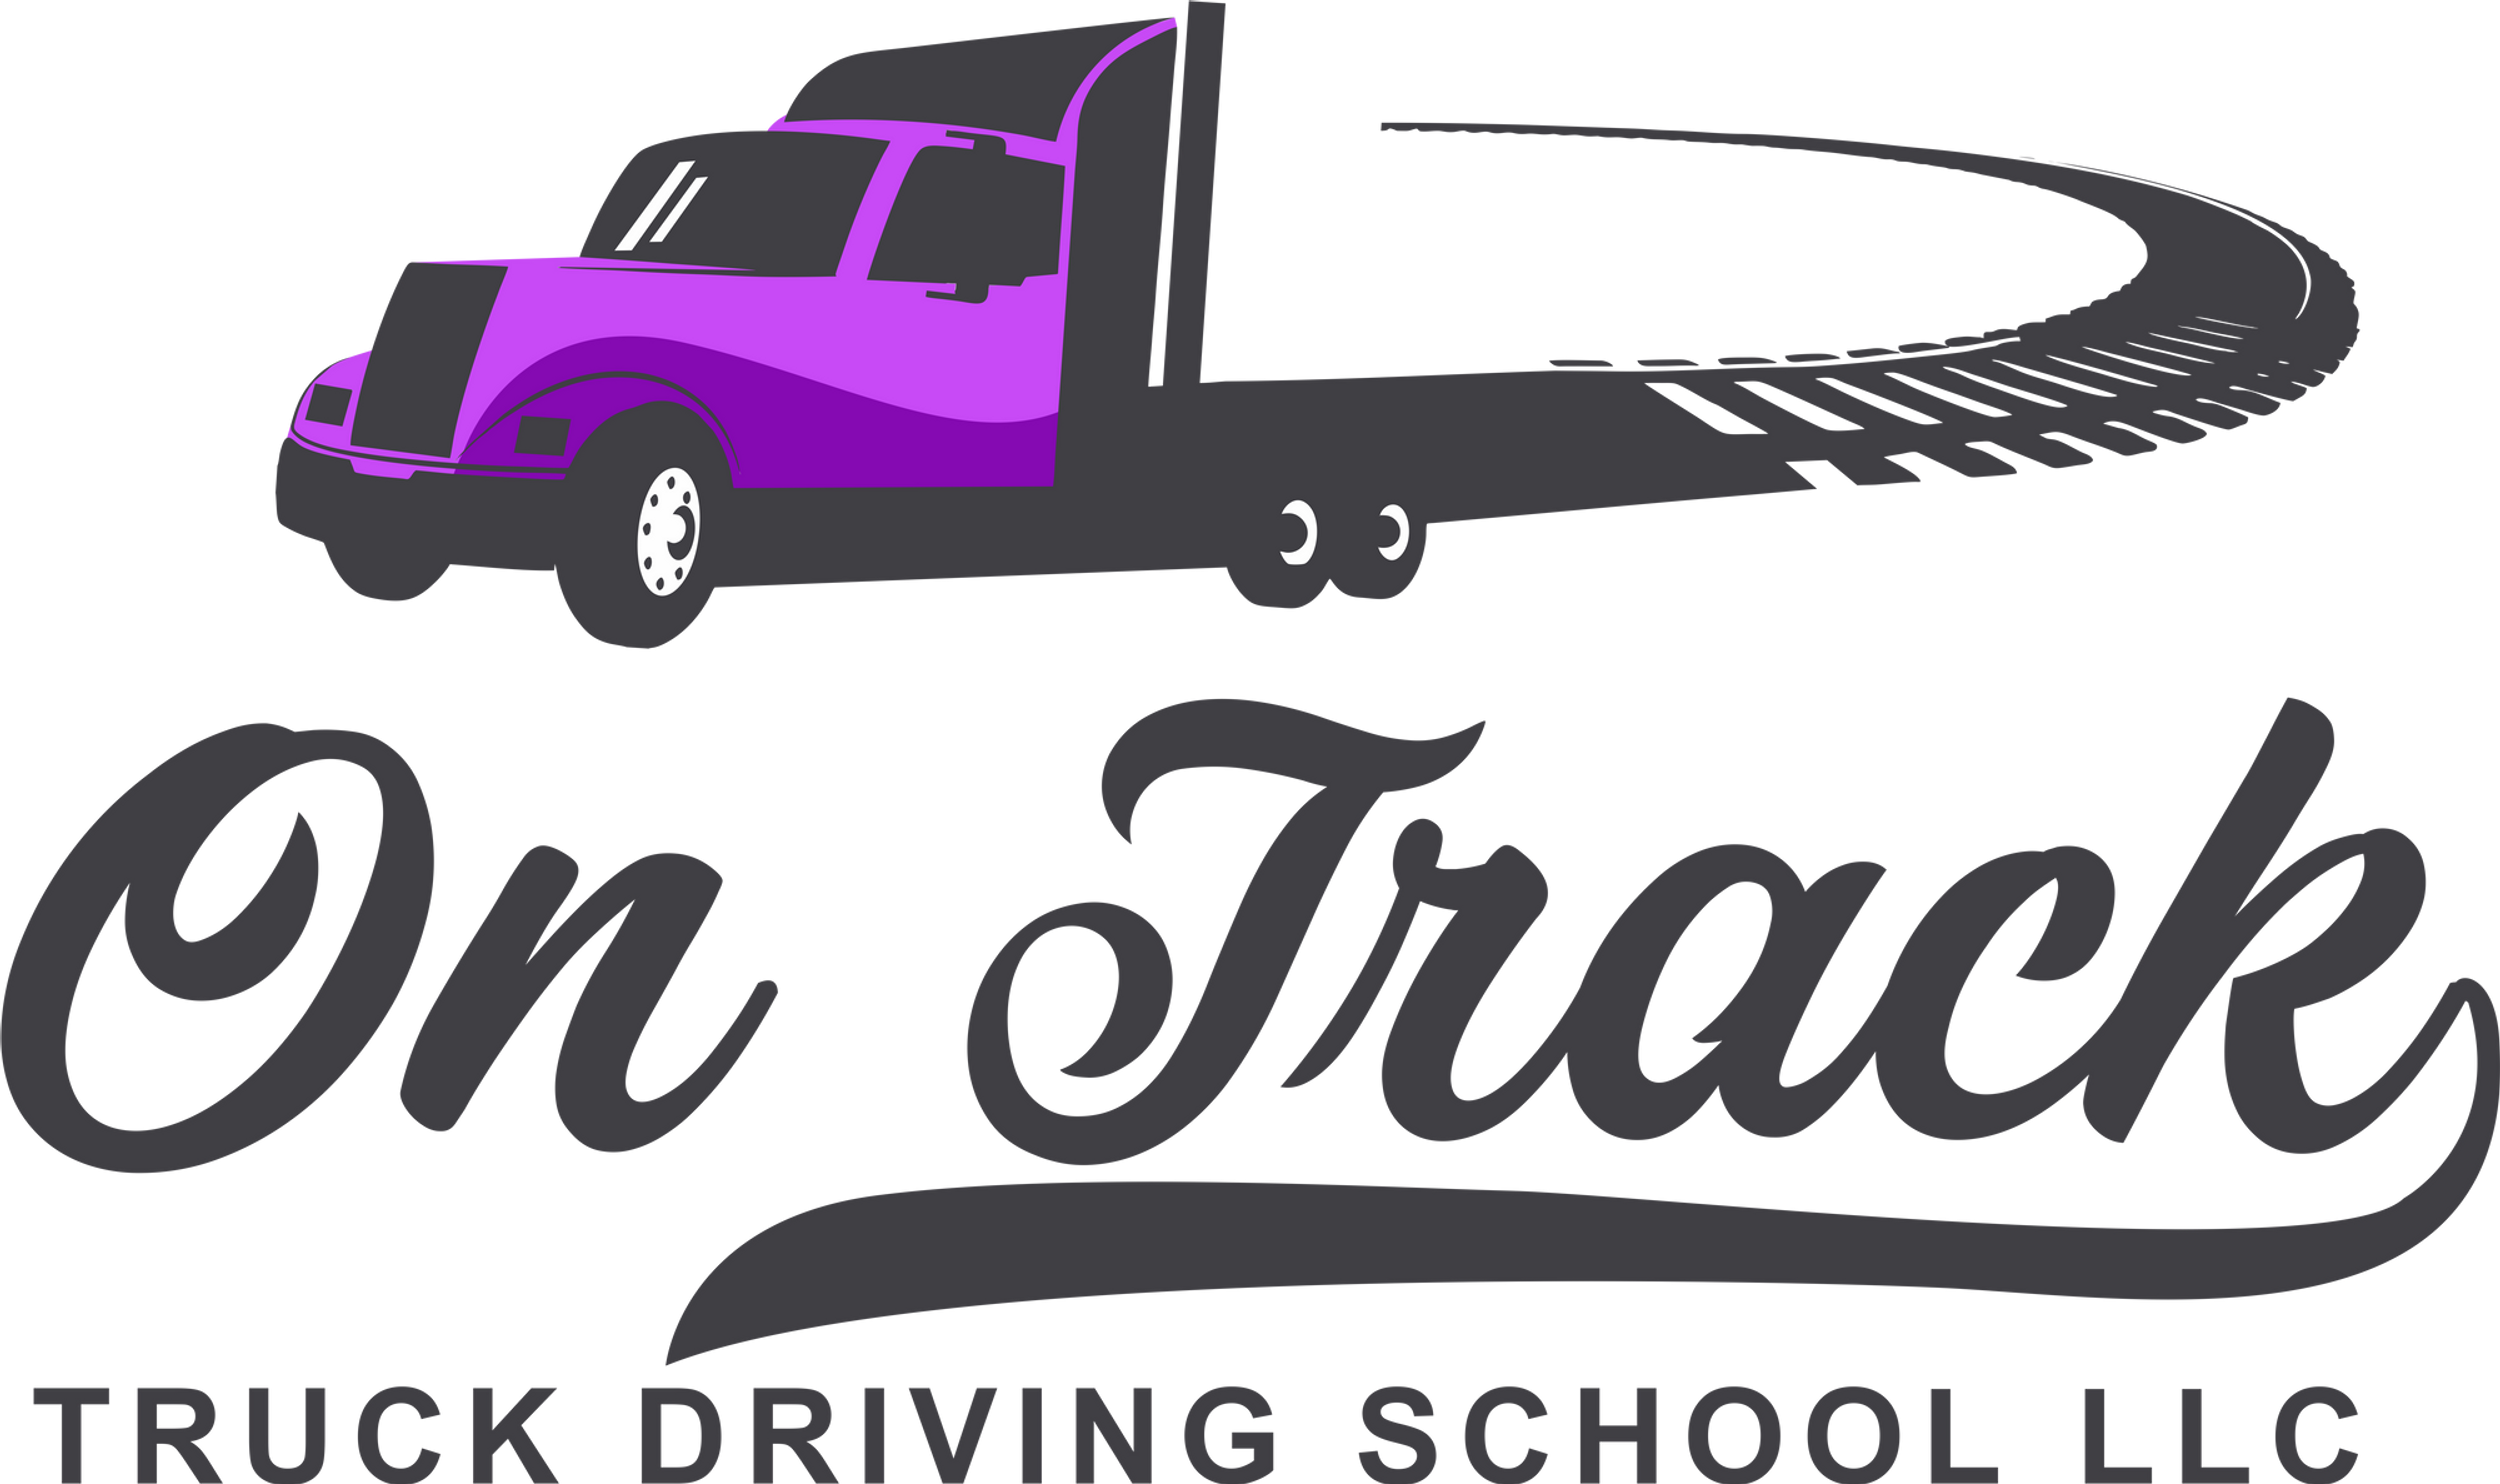 On Track Driving School LLC